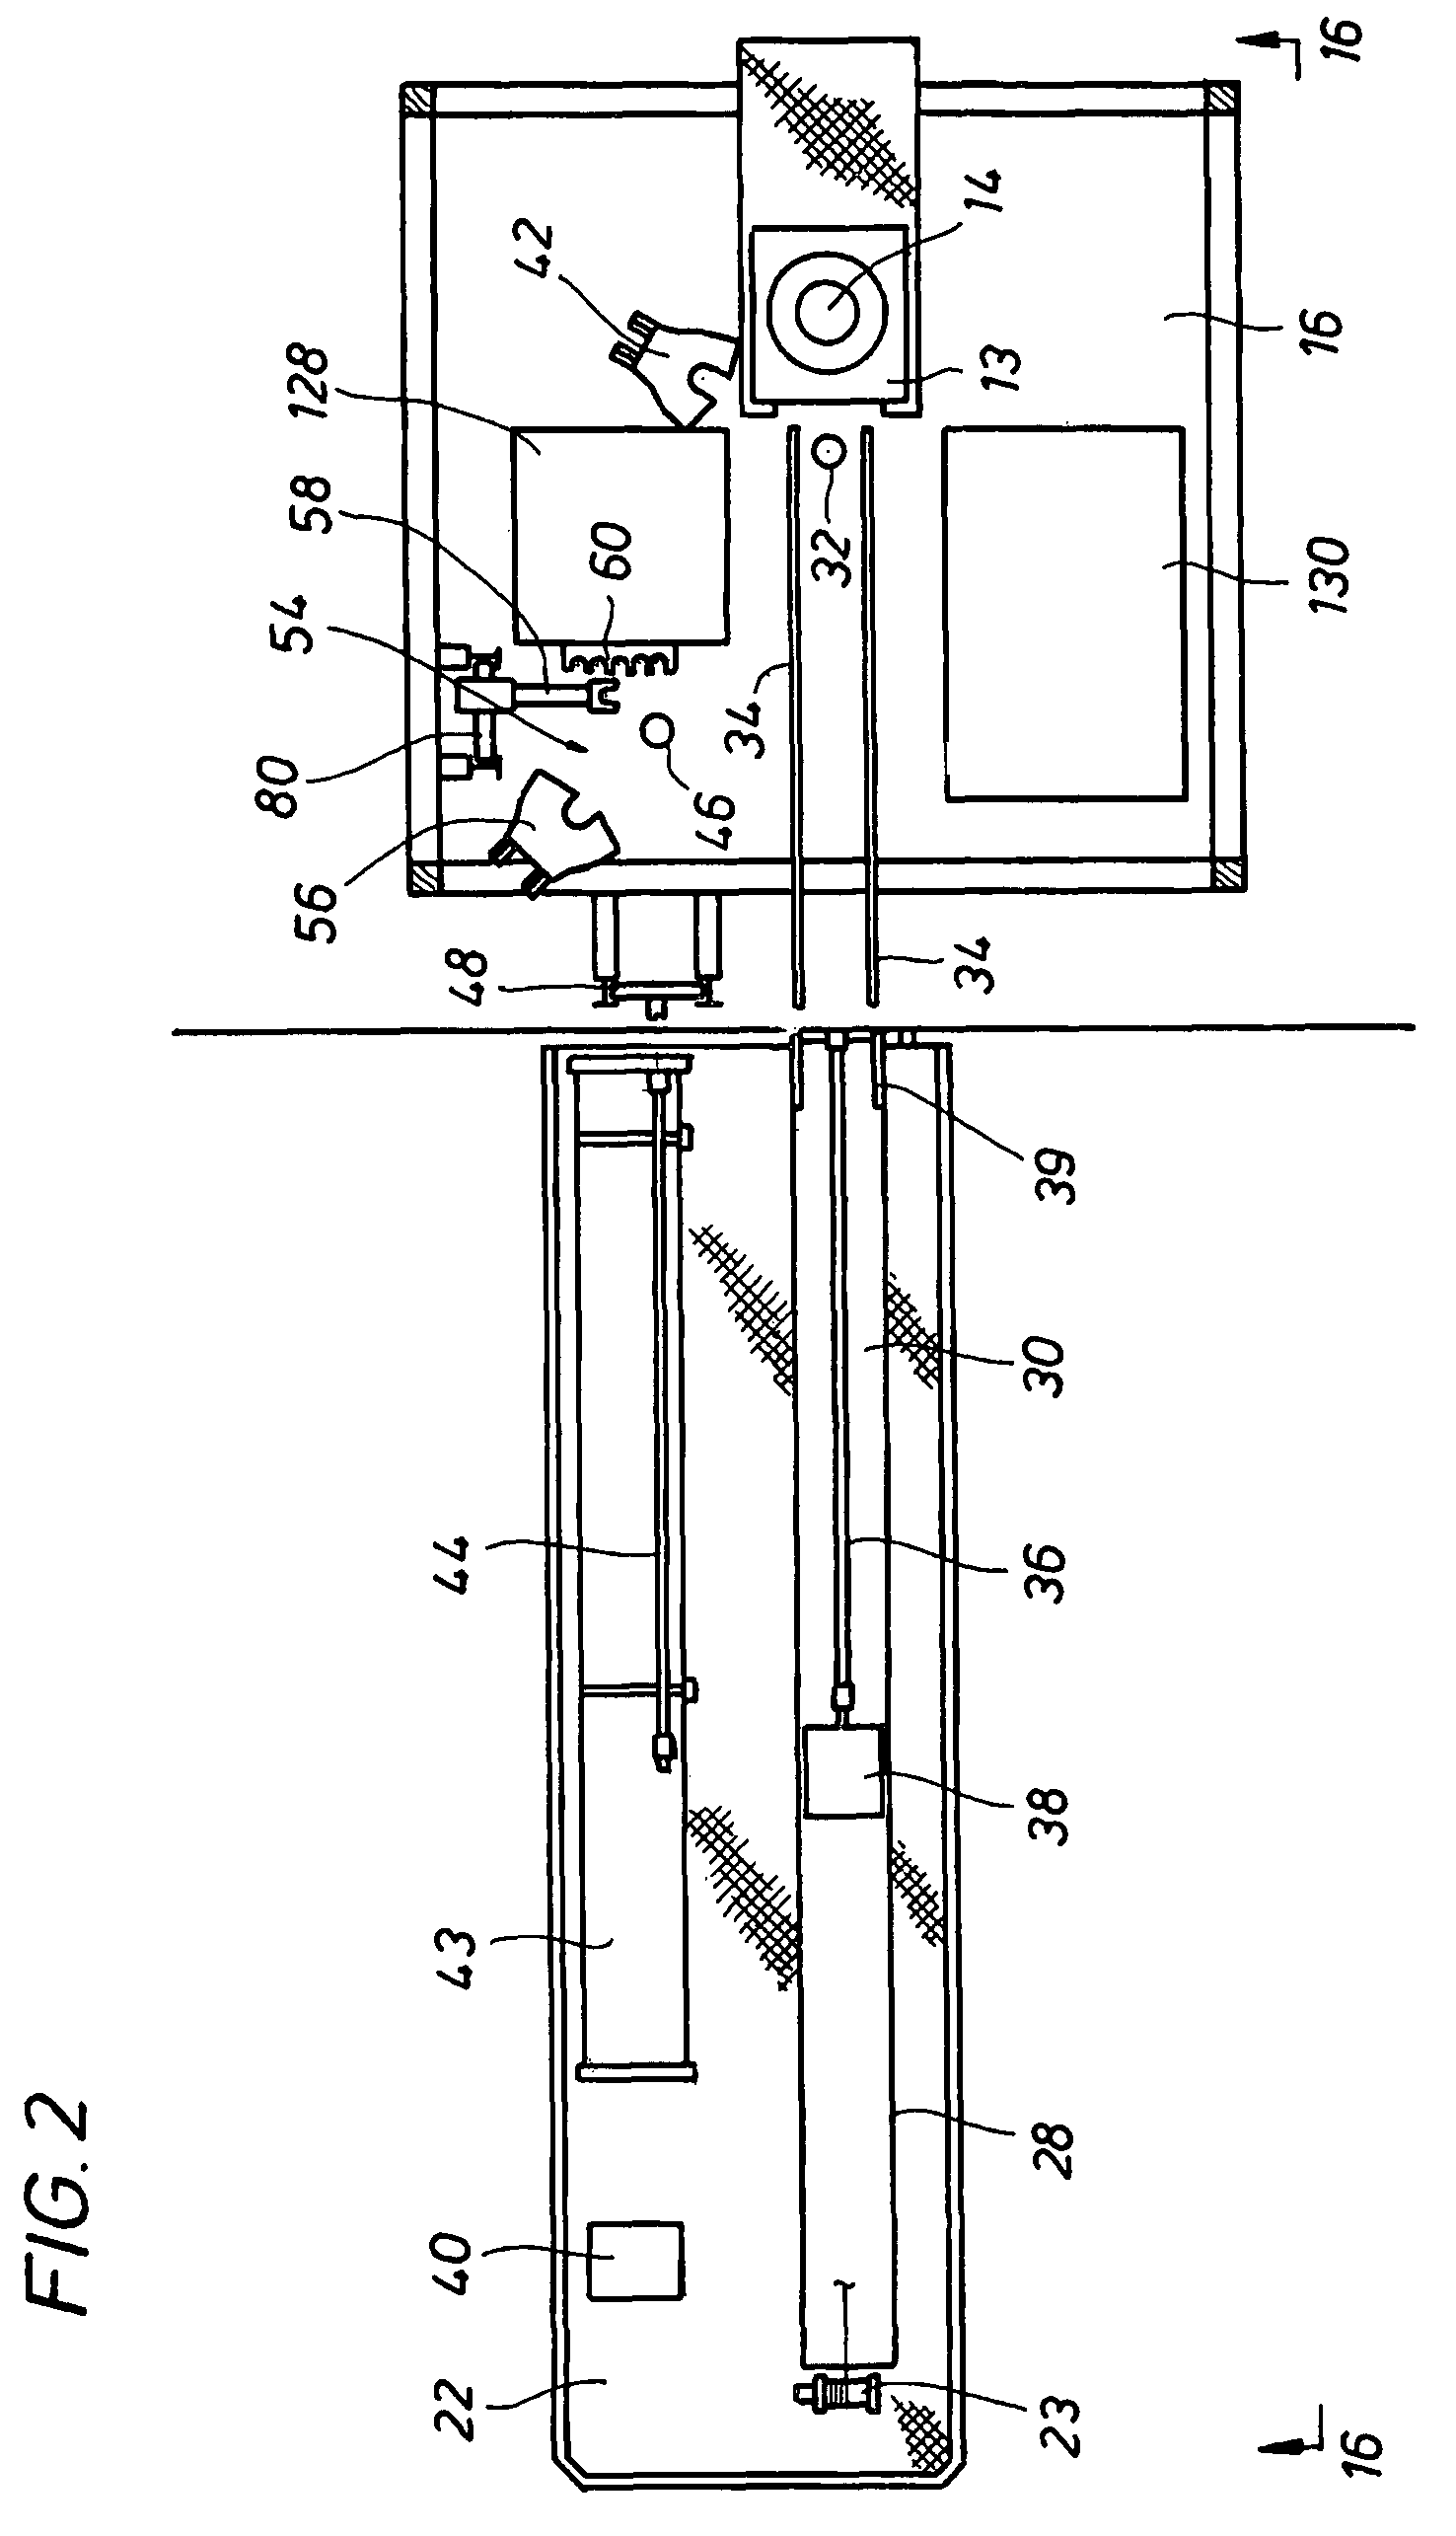 Simultaneous tubular handling system and method